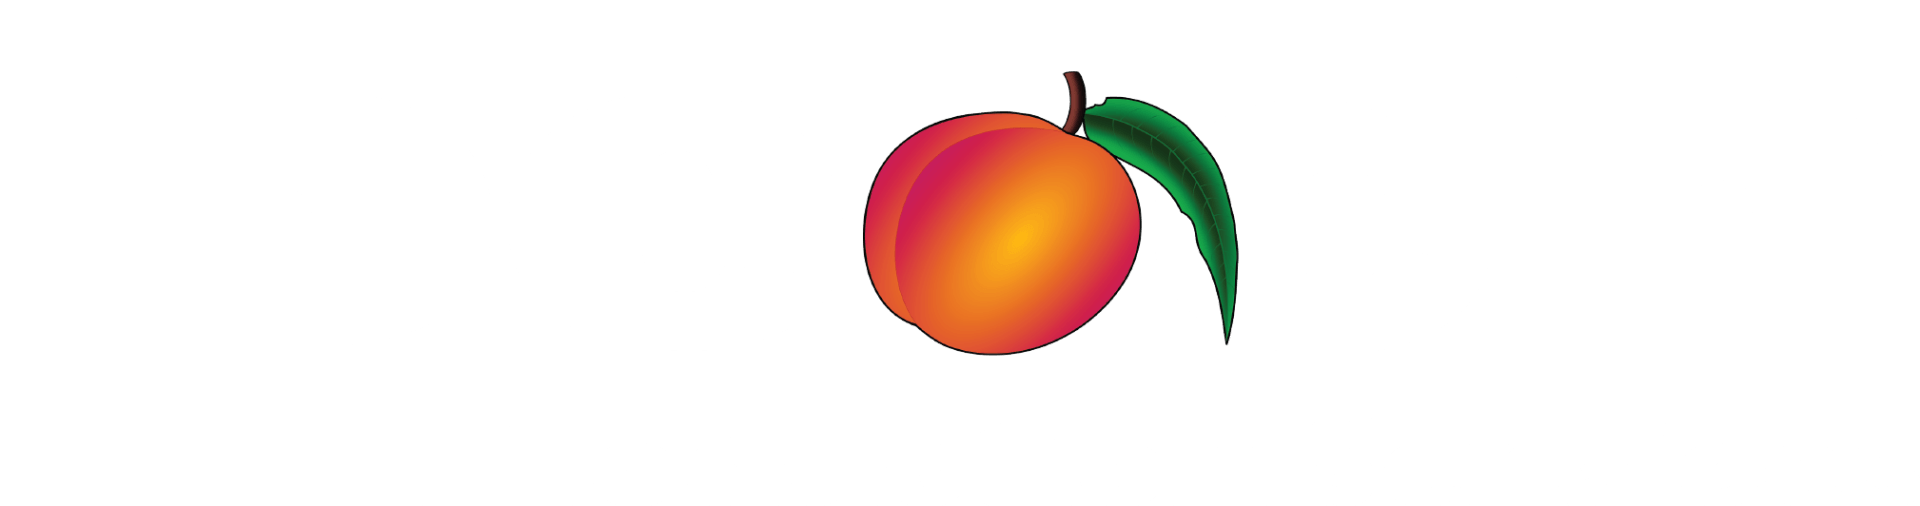 peach production services logo